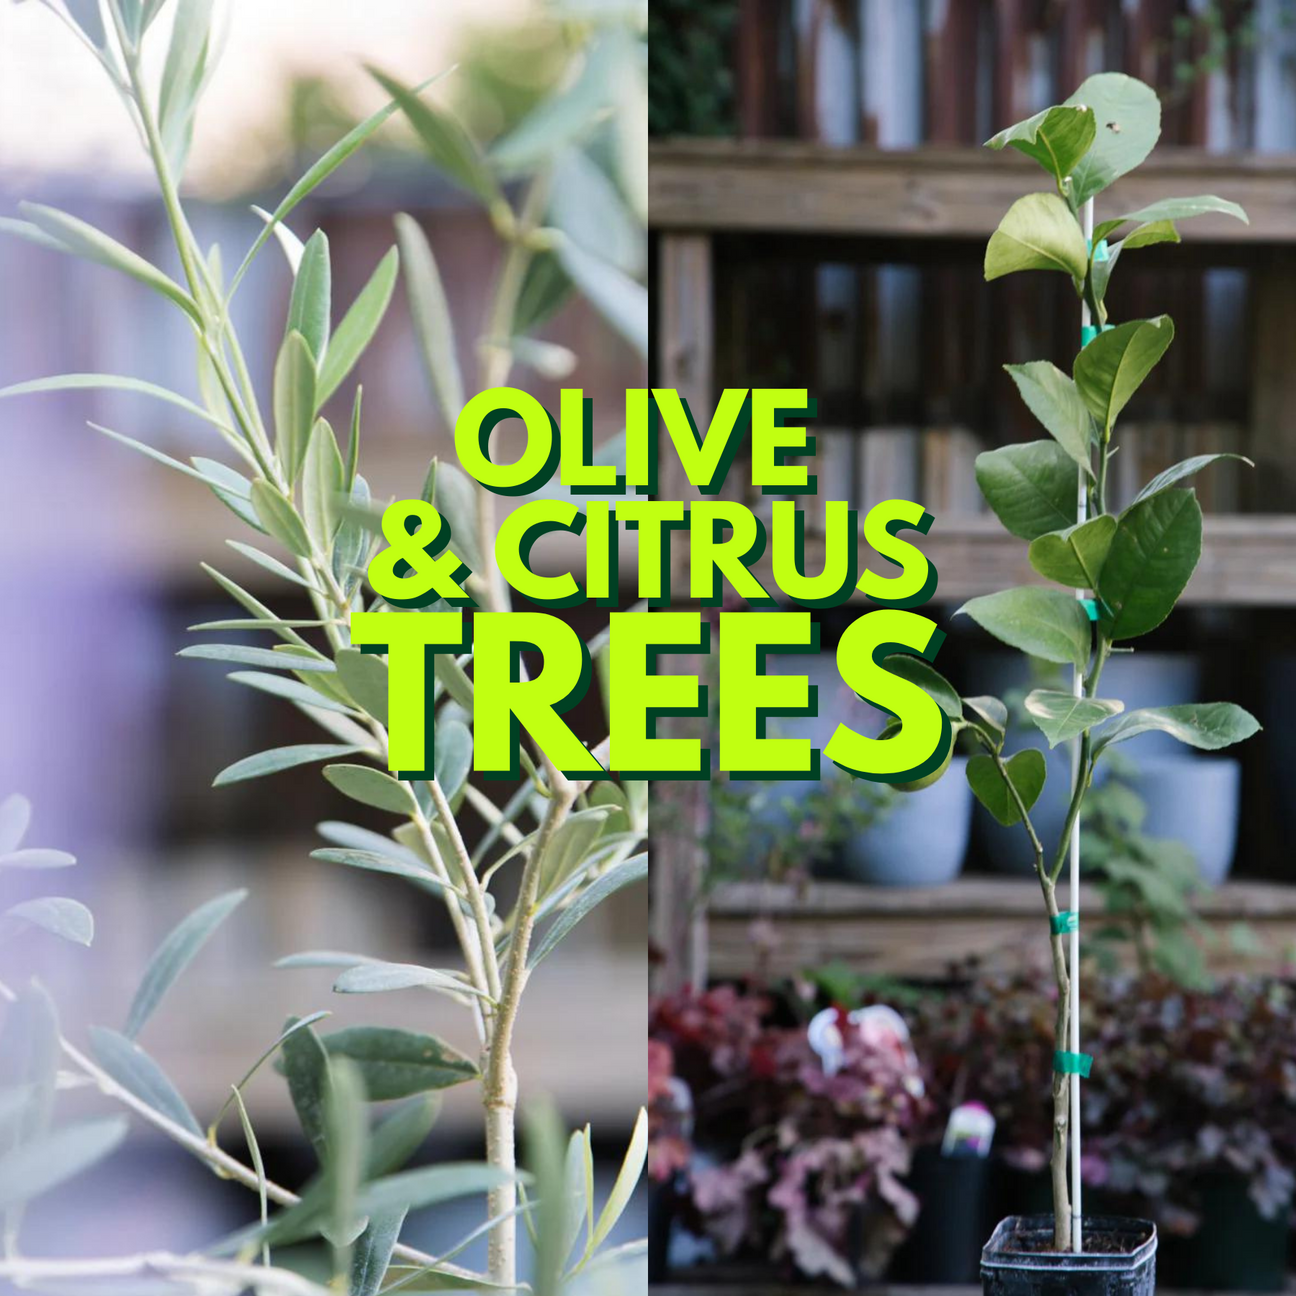 Olive & Citrus Trees